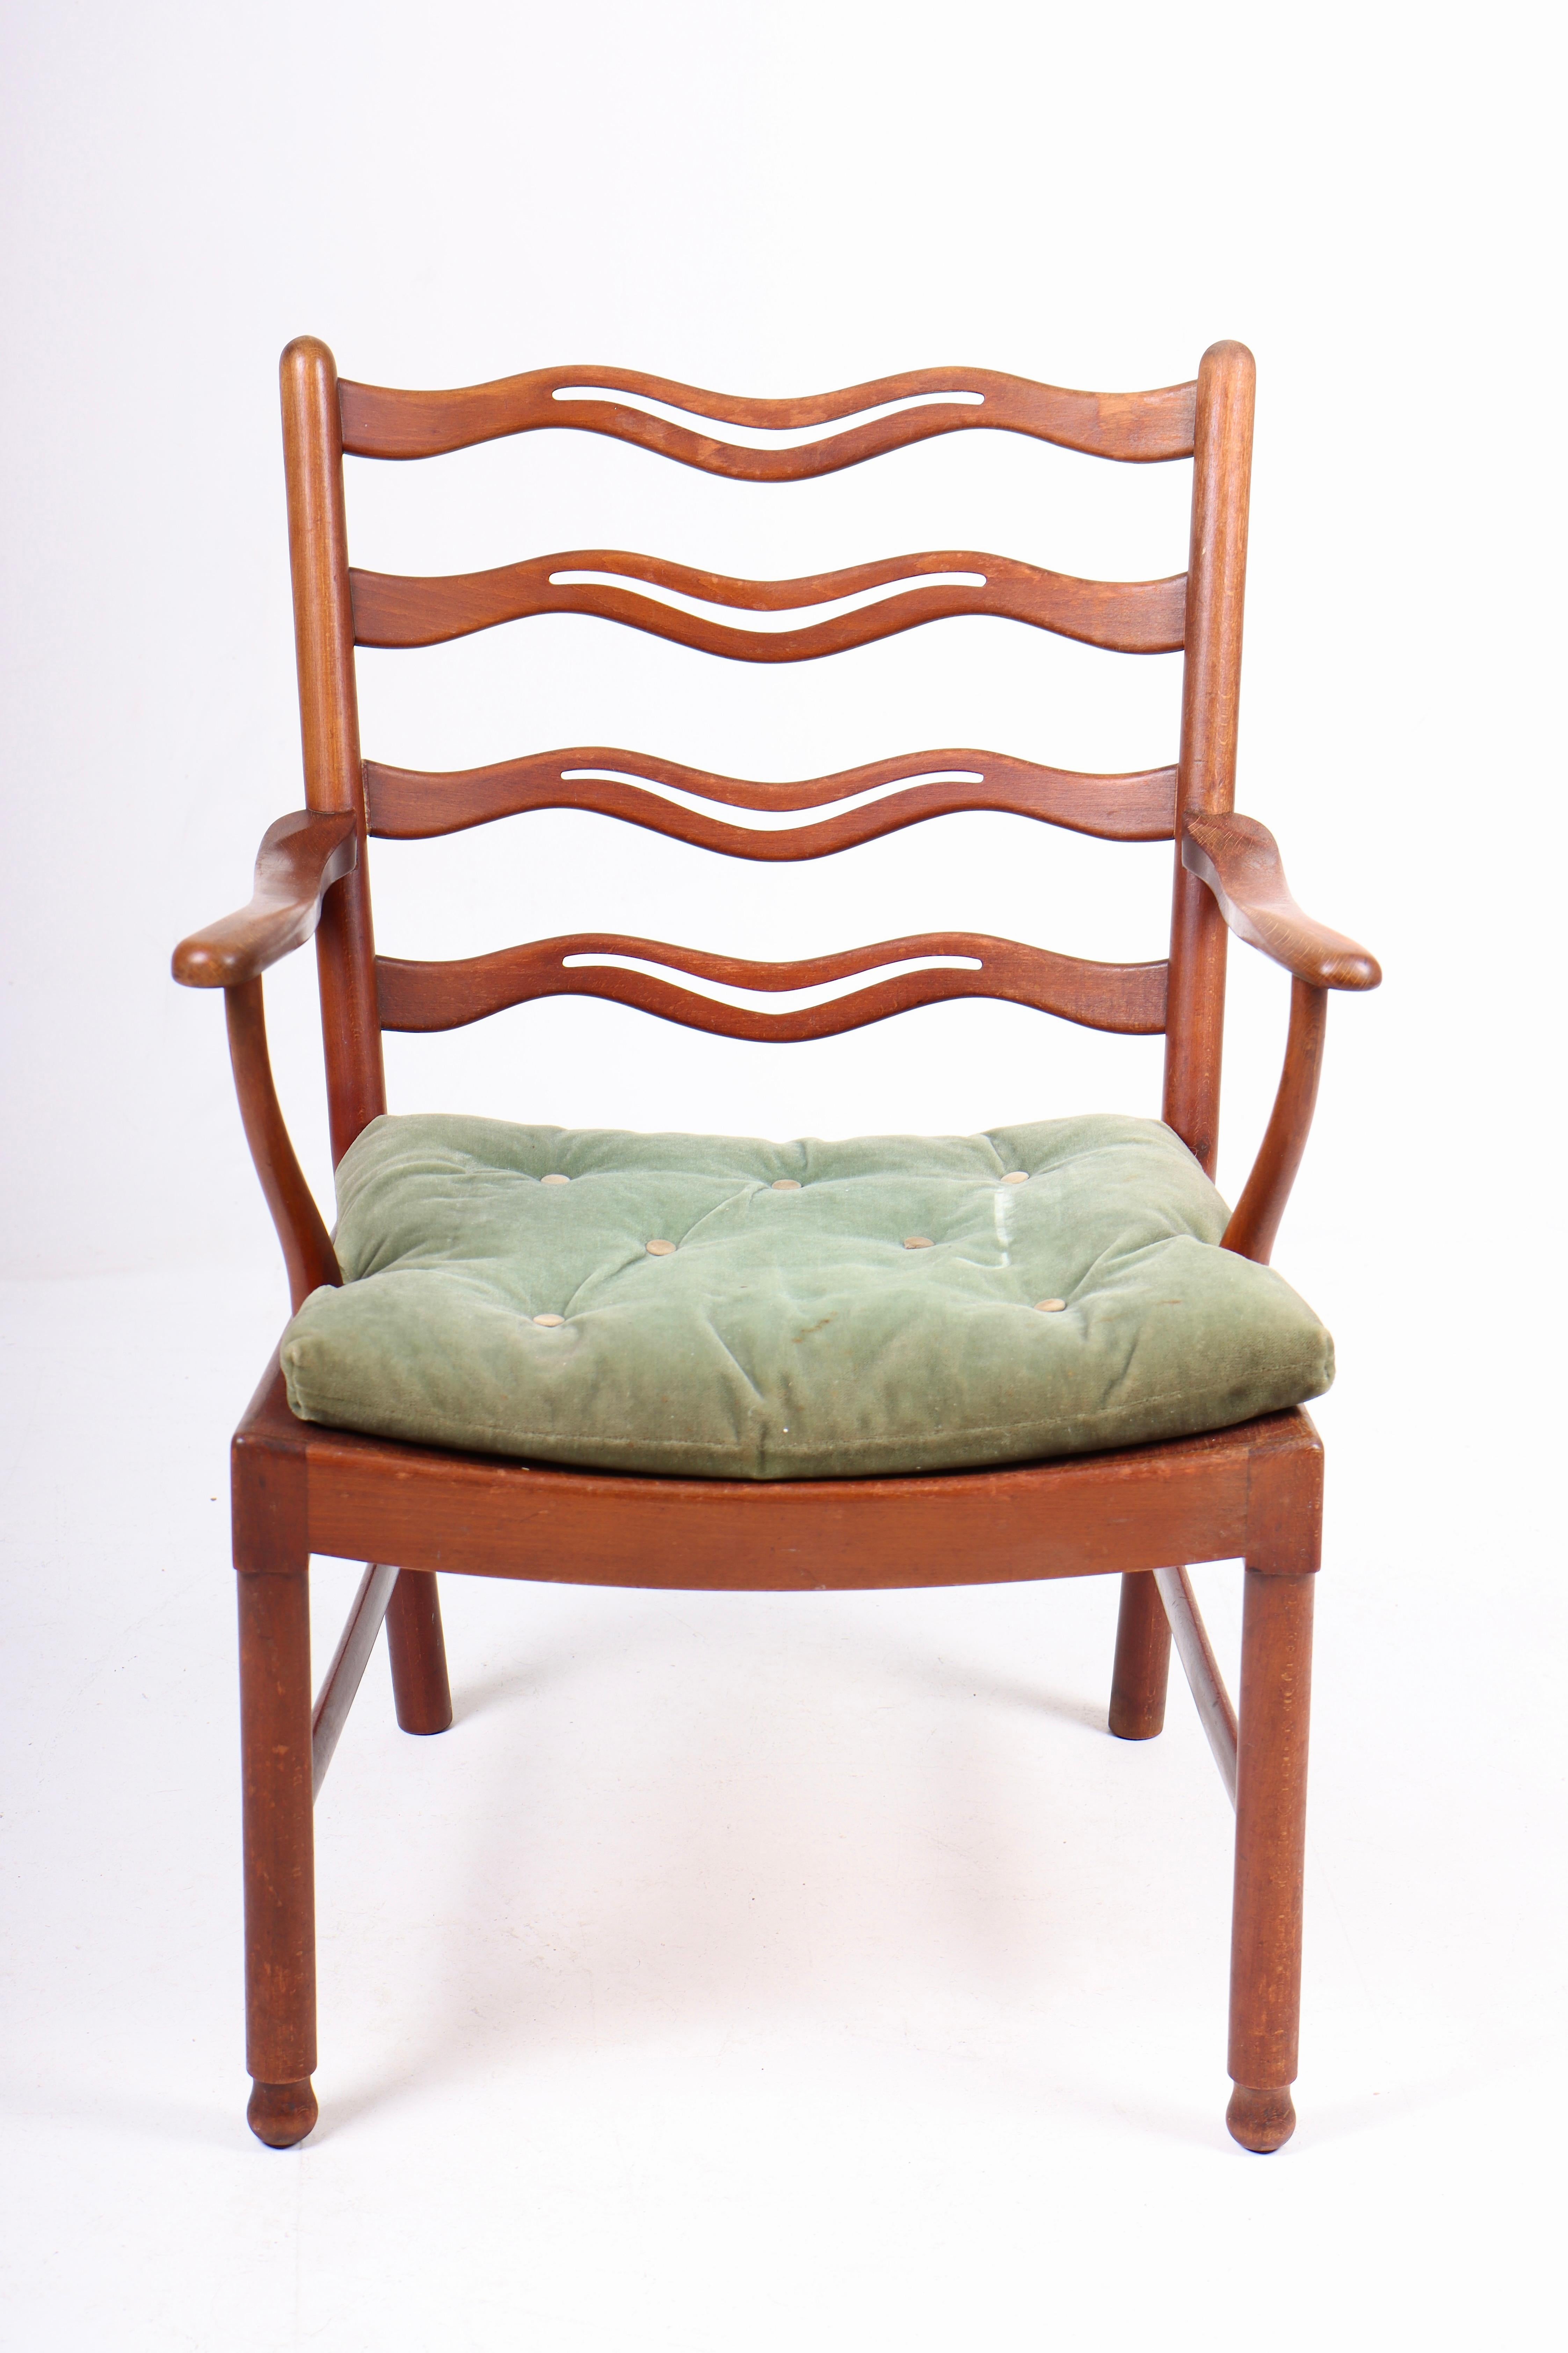 Scandinavian Modern Ladder Back Lounge Chair by Ole Wanscher, 1940s For Sale